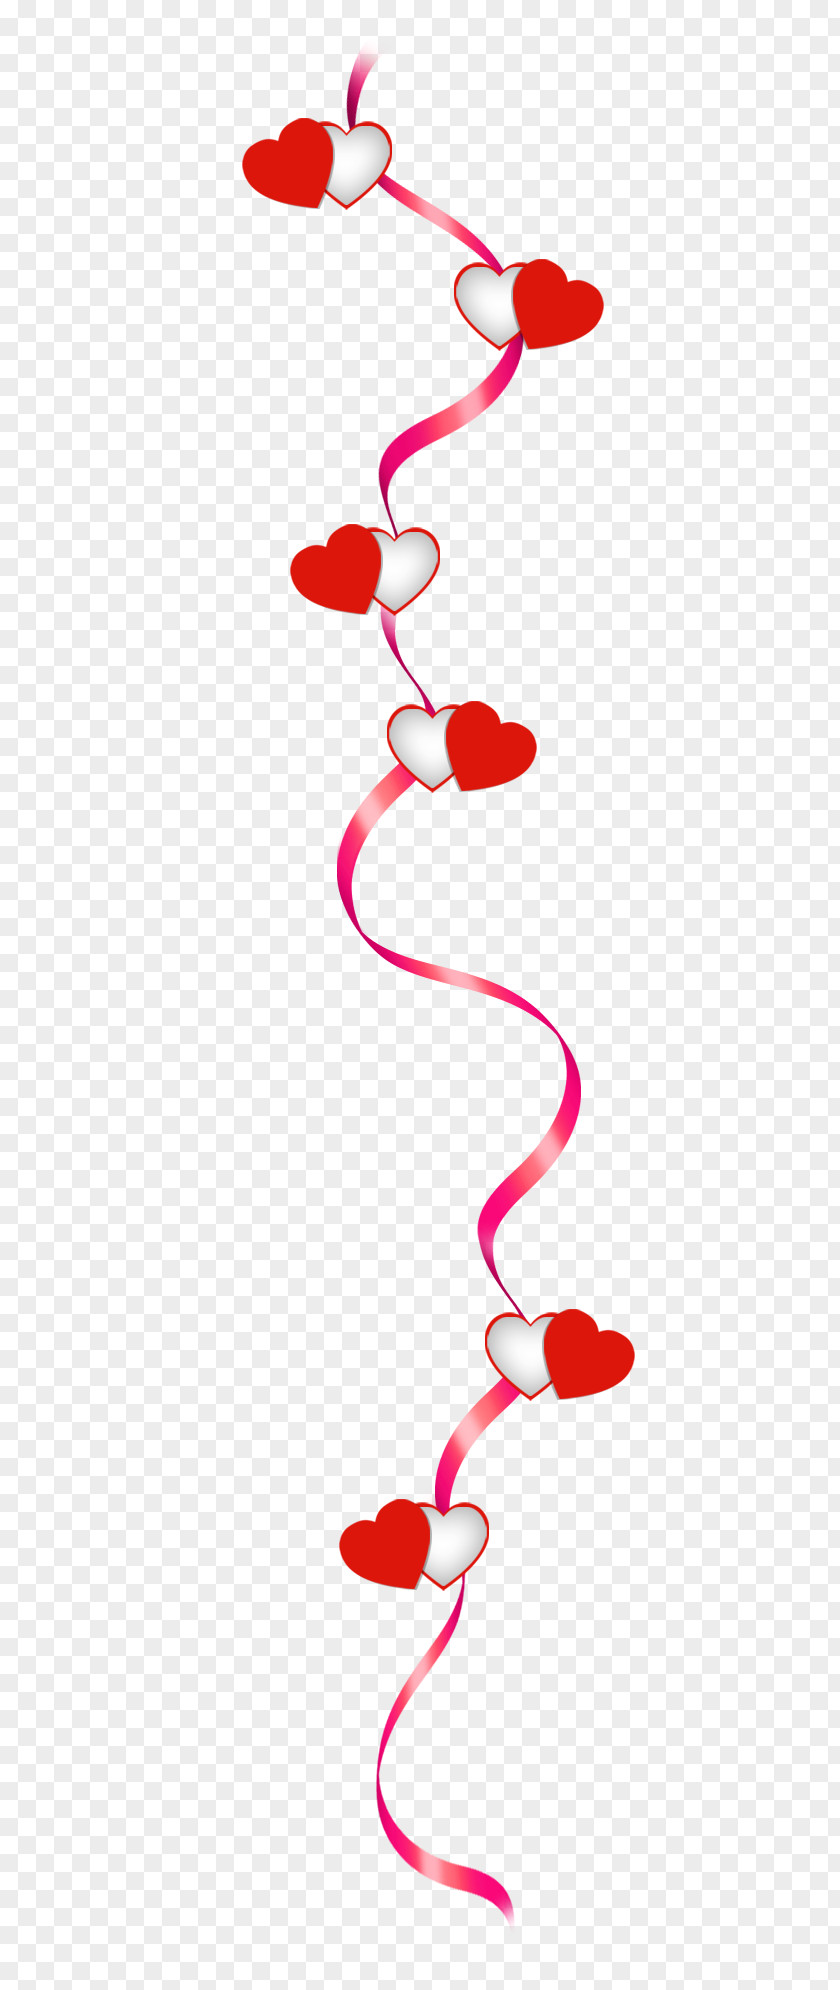 Heart-shaped Ornament Sticker Clip Art PNG